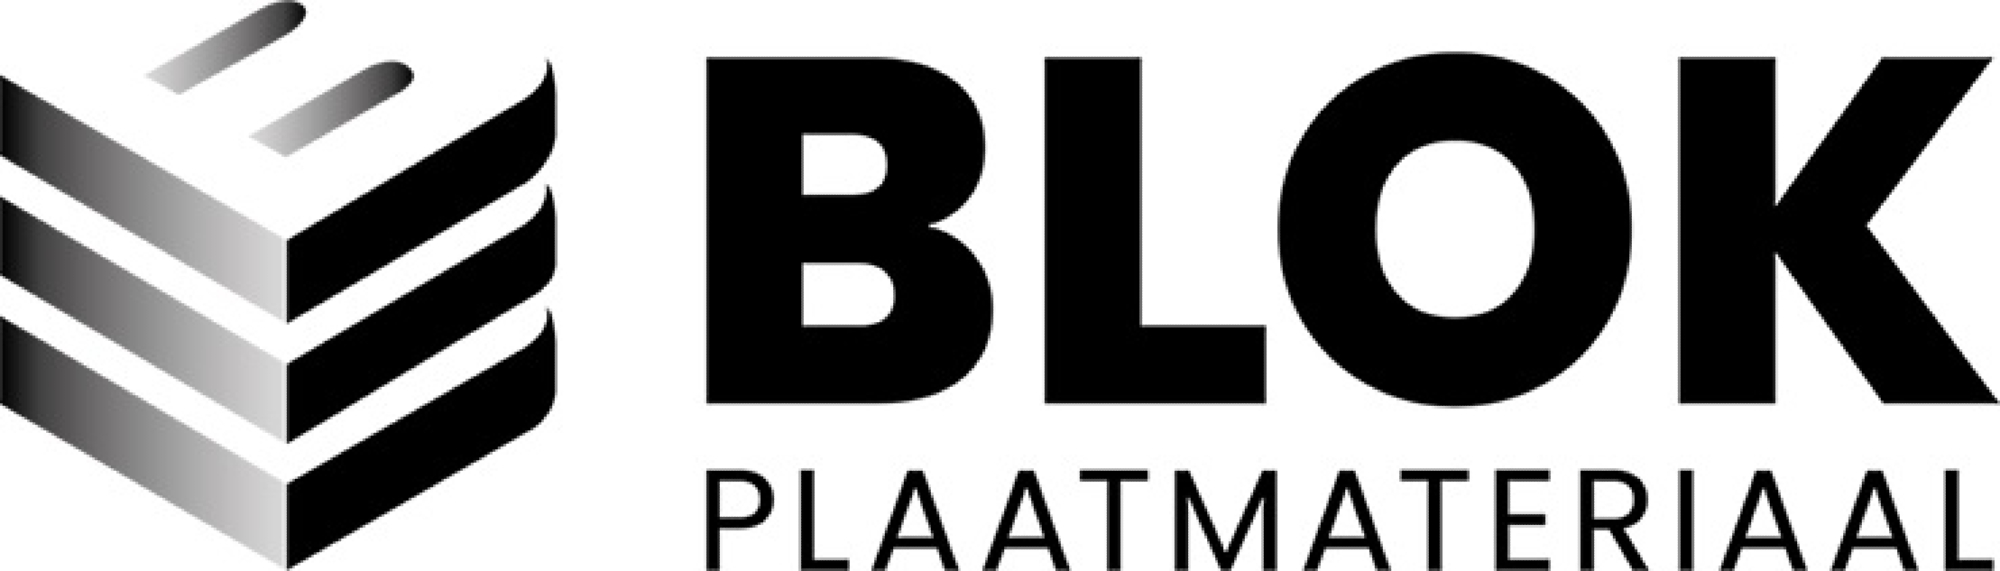 Lancering rebranding BLOK Plaatmateriaal